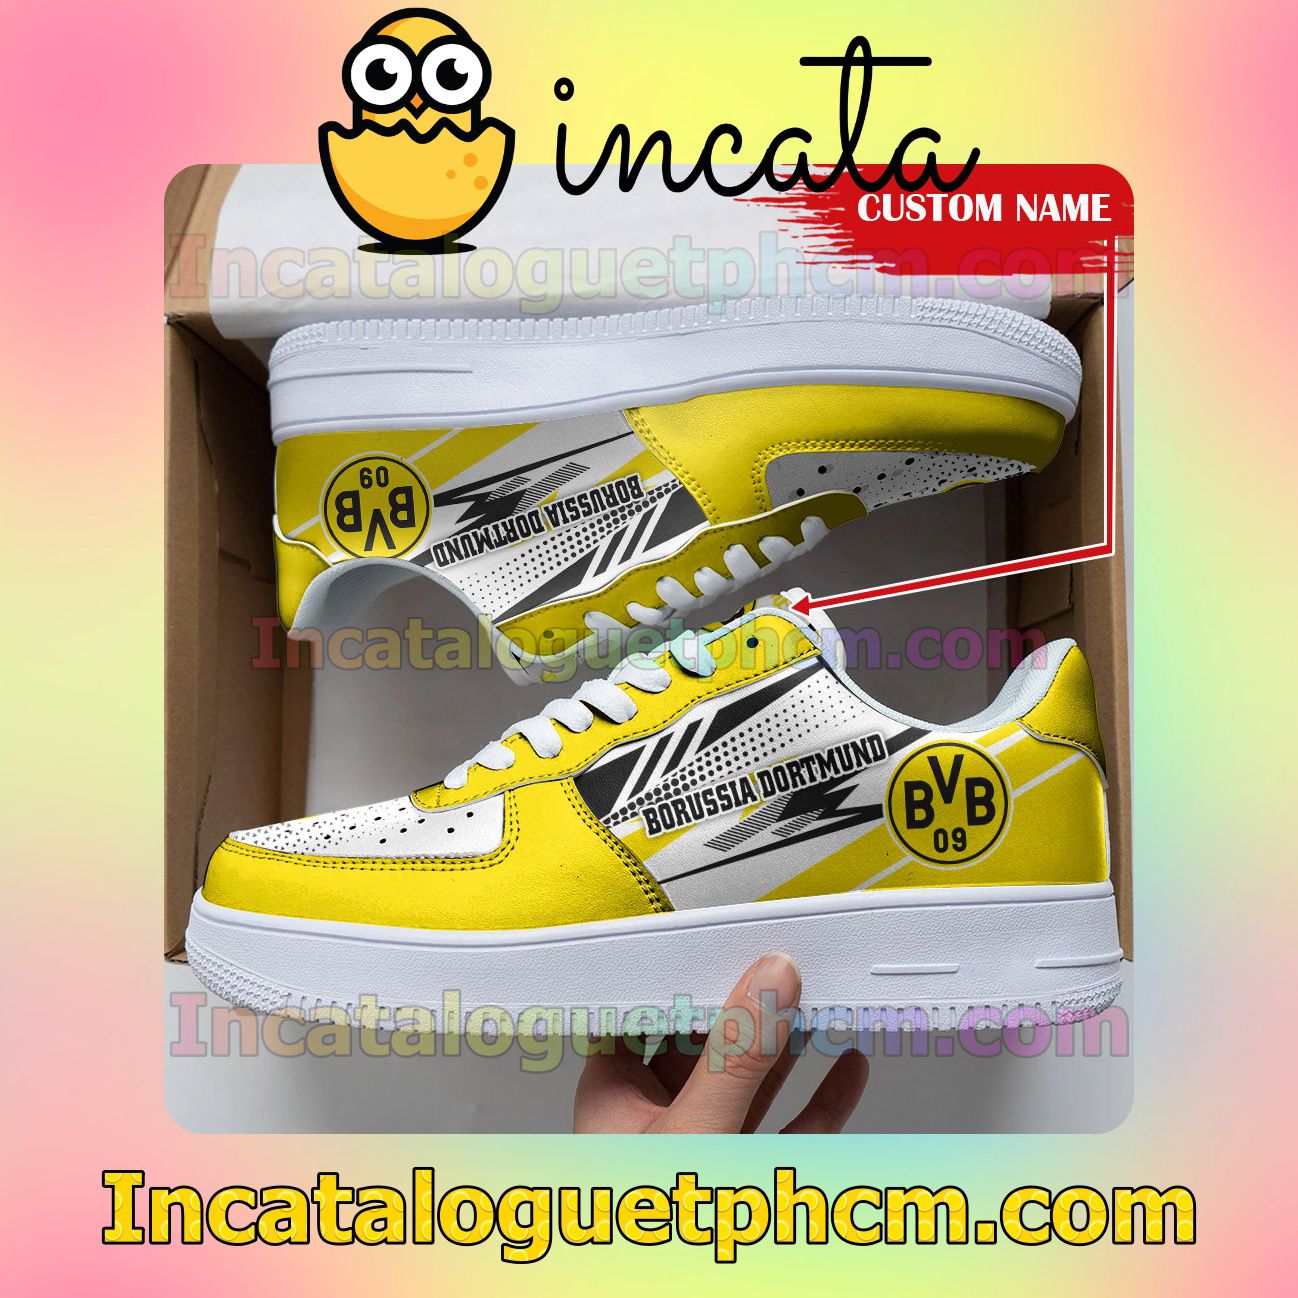  Personalized Bundesliga Borussia Dortmund Custom Name Nike Low Shoes Sneakers